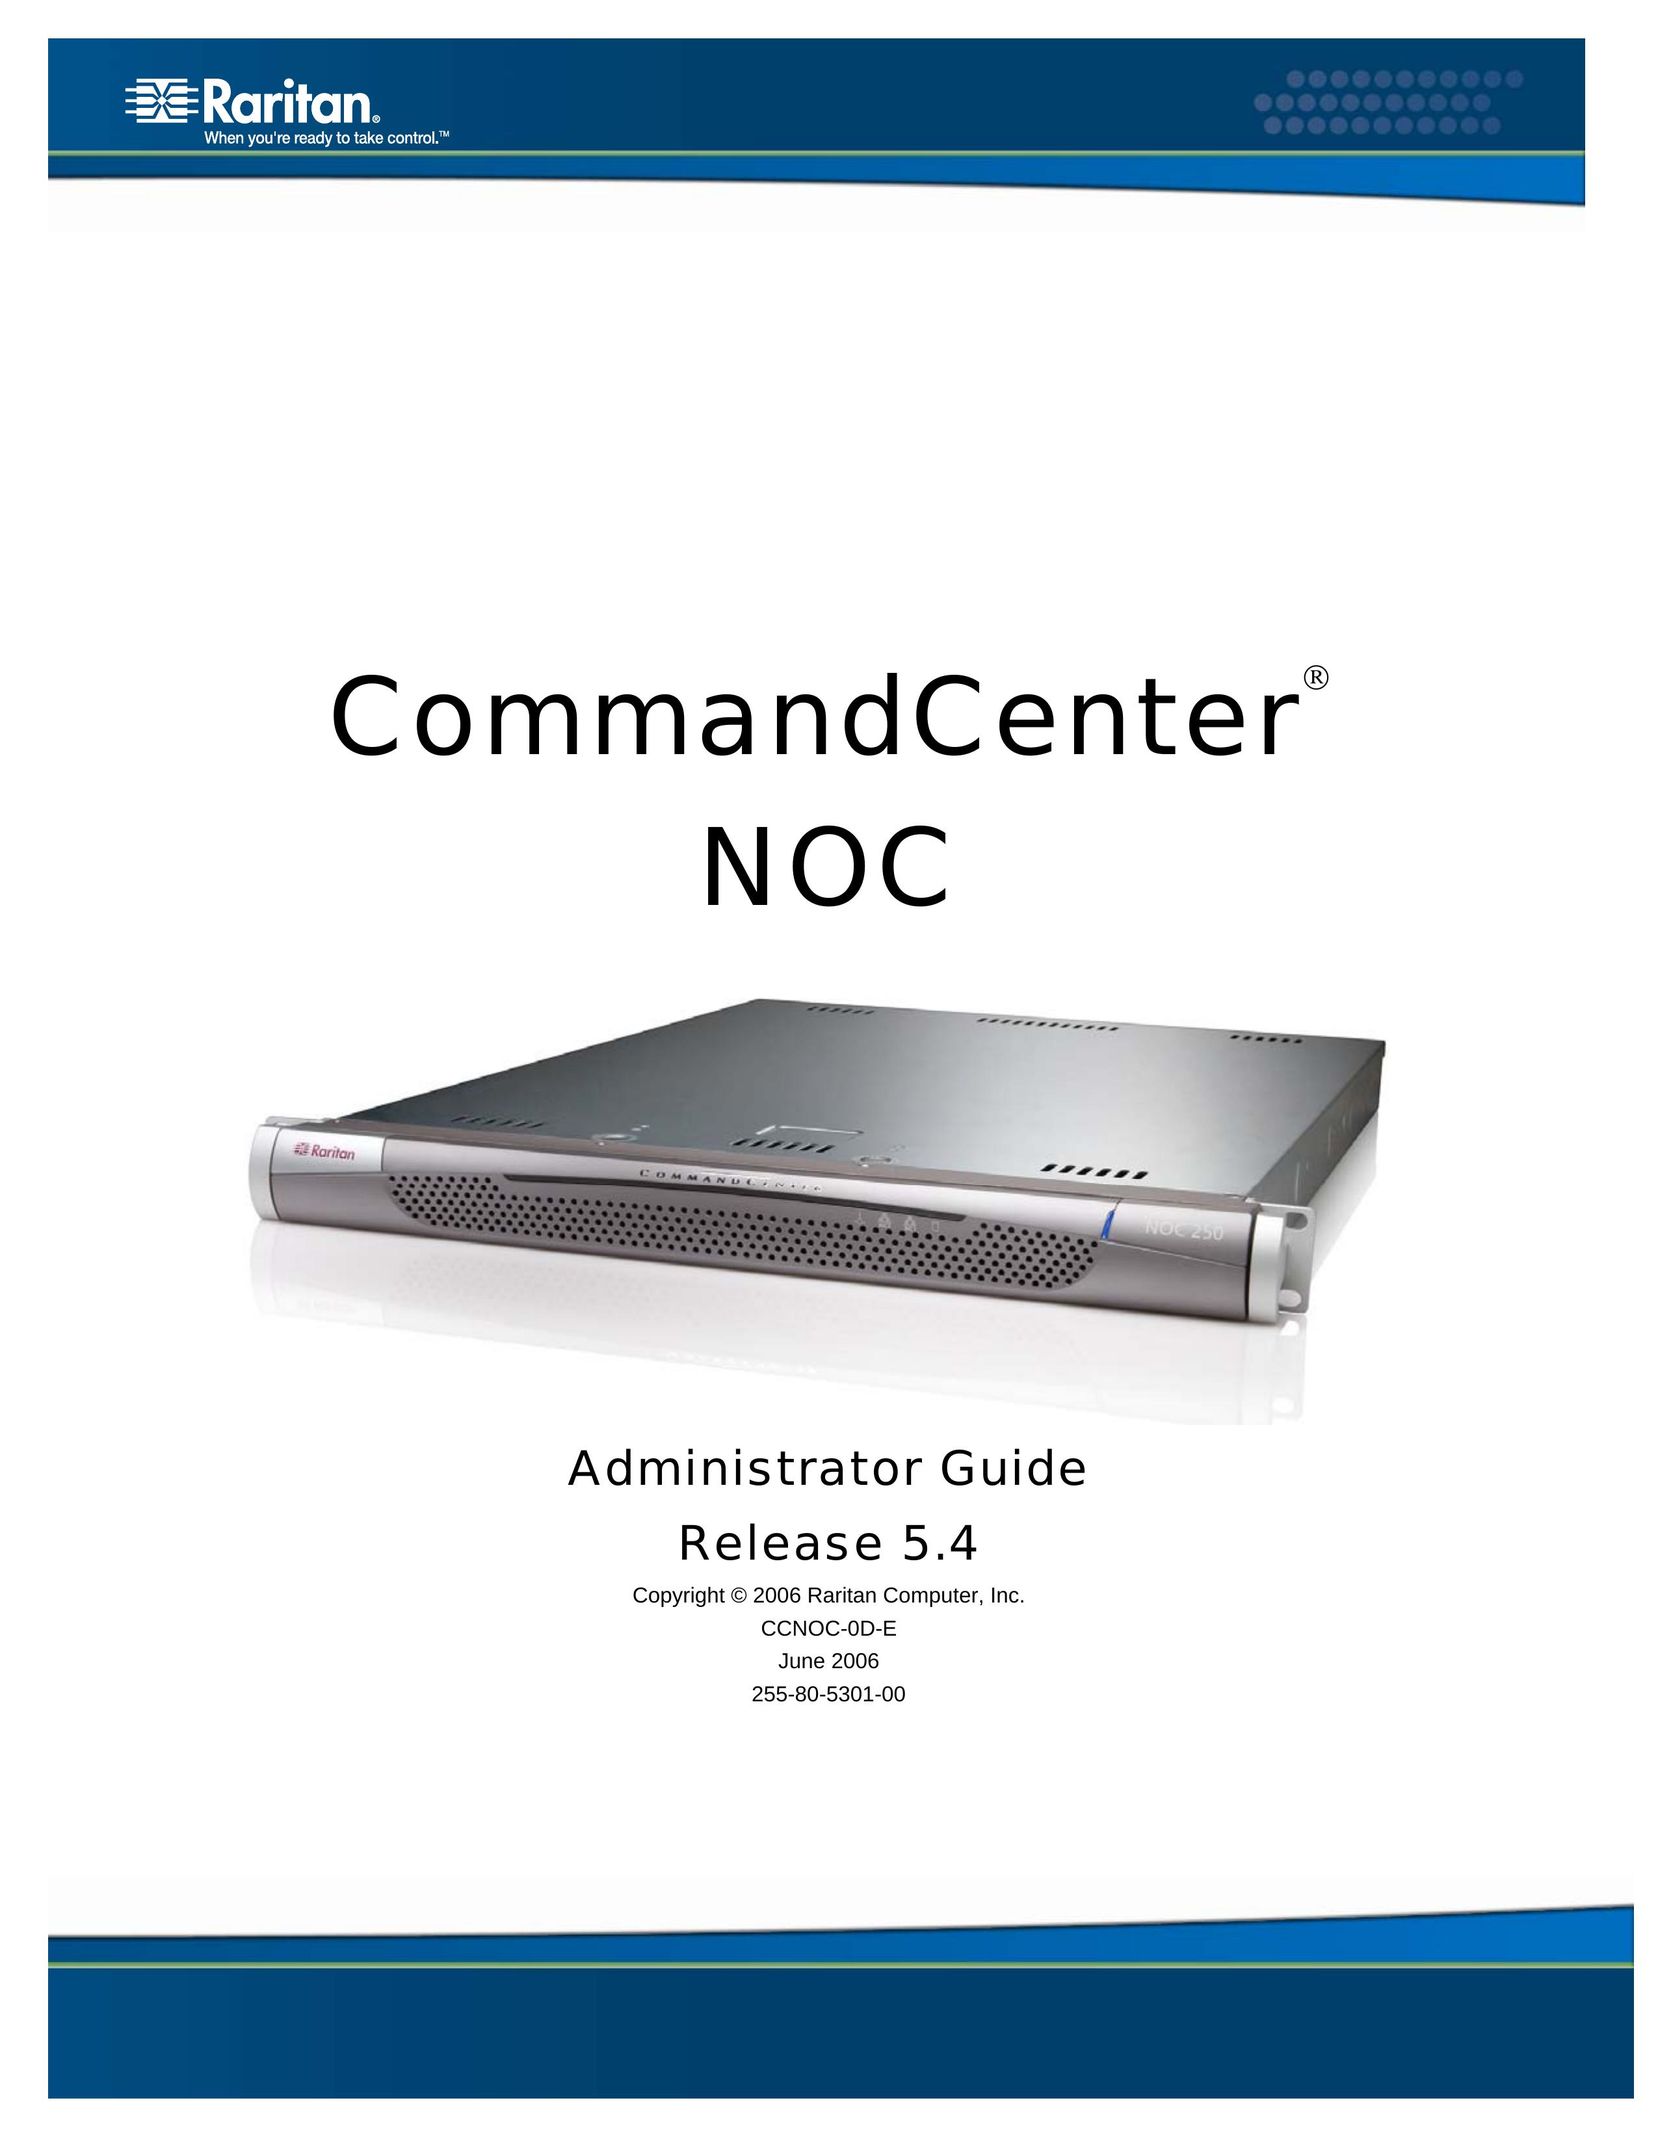 Raritan Computer NOC Modem User Manual